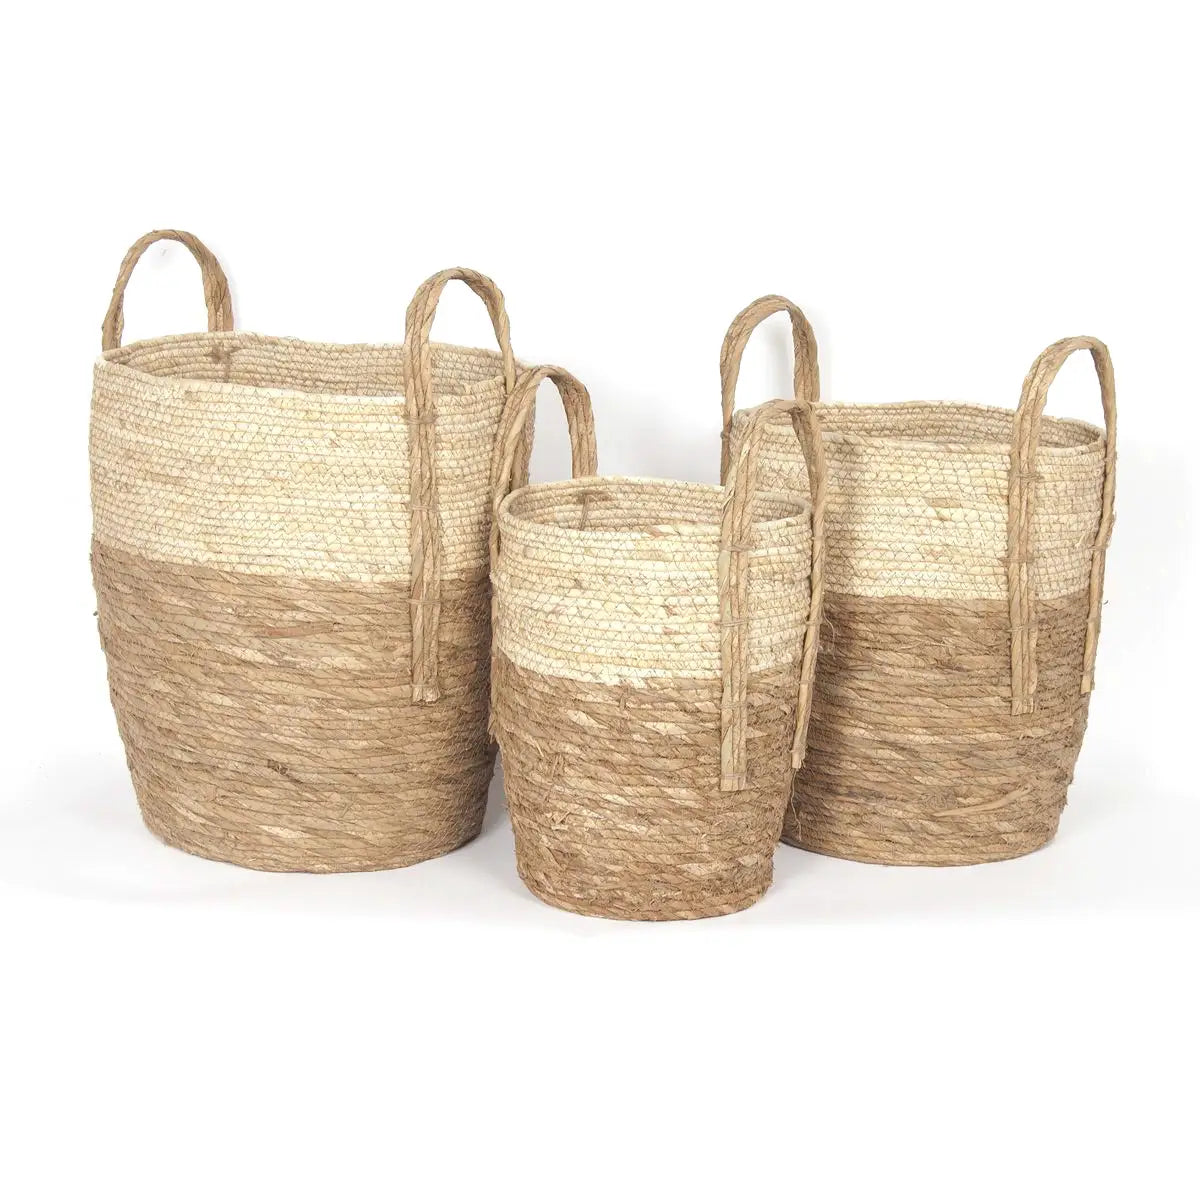 Maize Baskets- 3 sizes